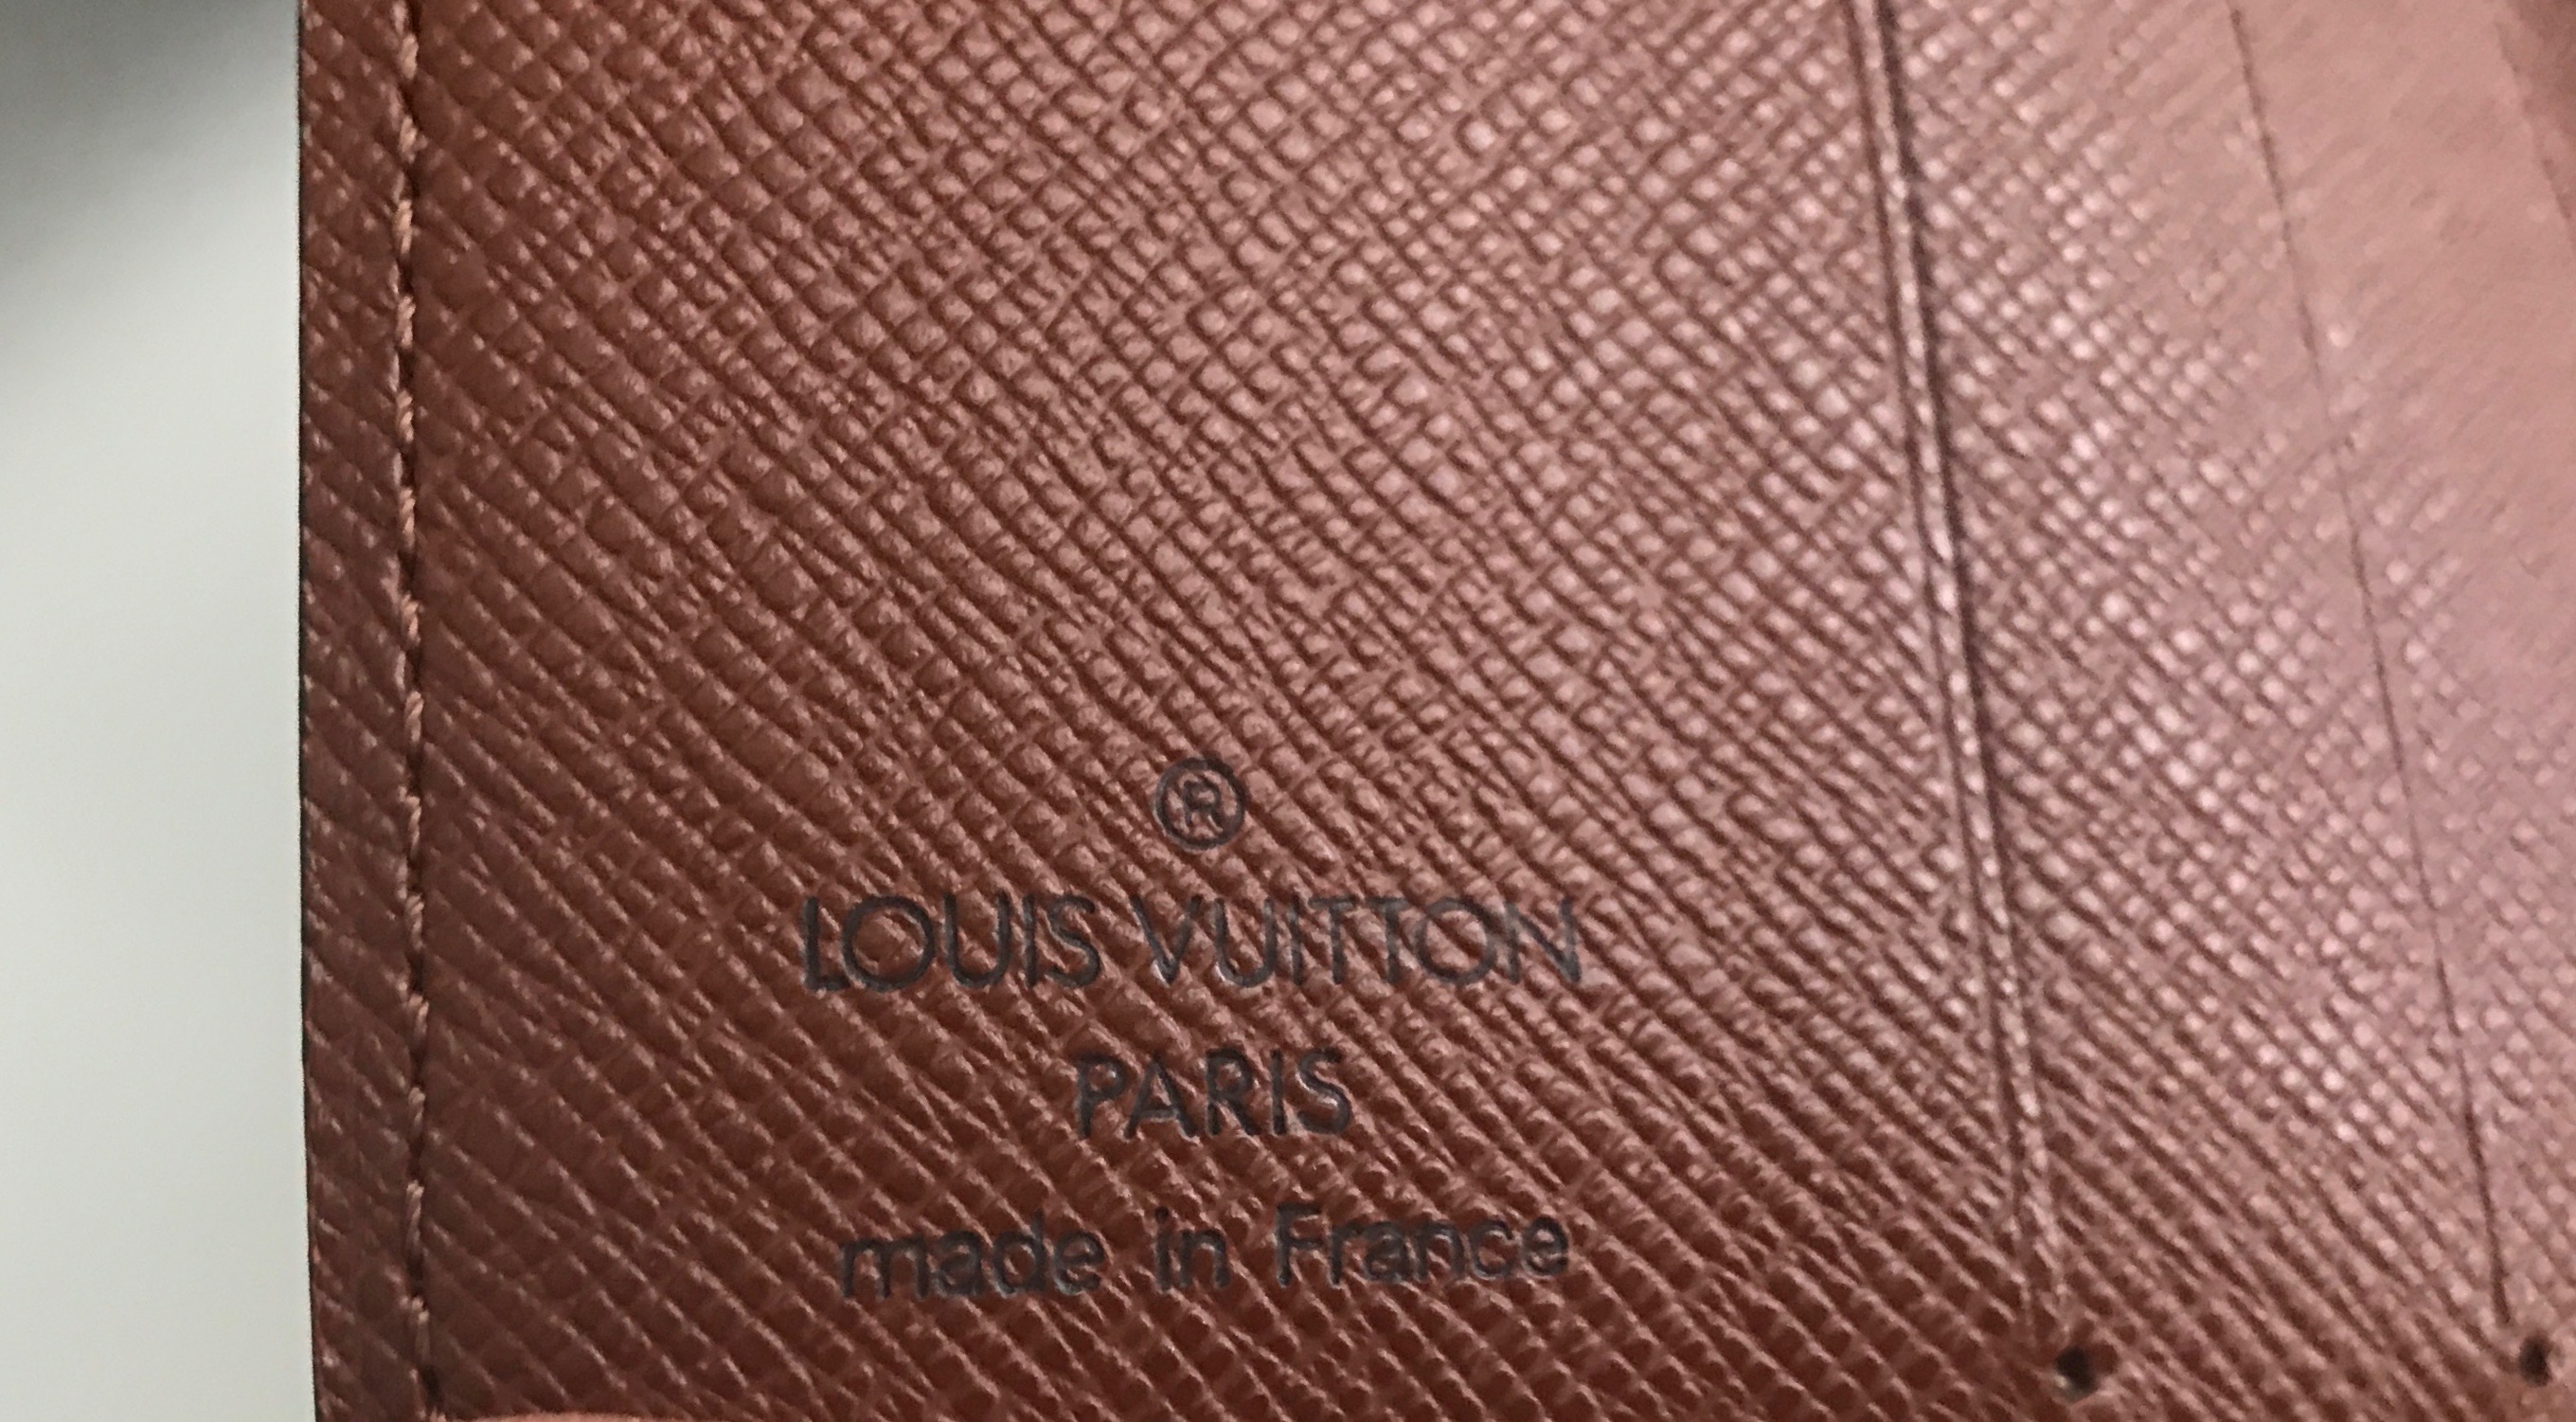 Louis Vuitton Compact Zip M61667 Monogram Canvas Bifold Wallet Brown